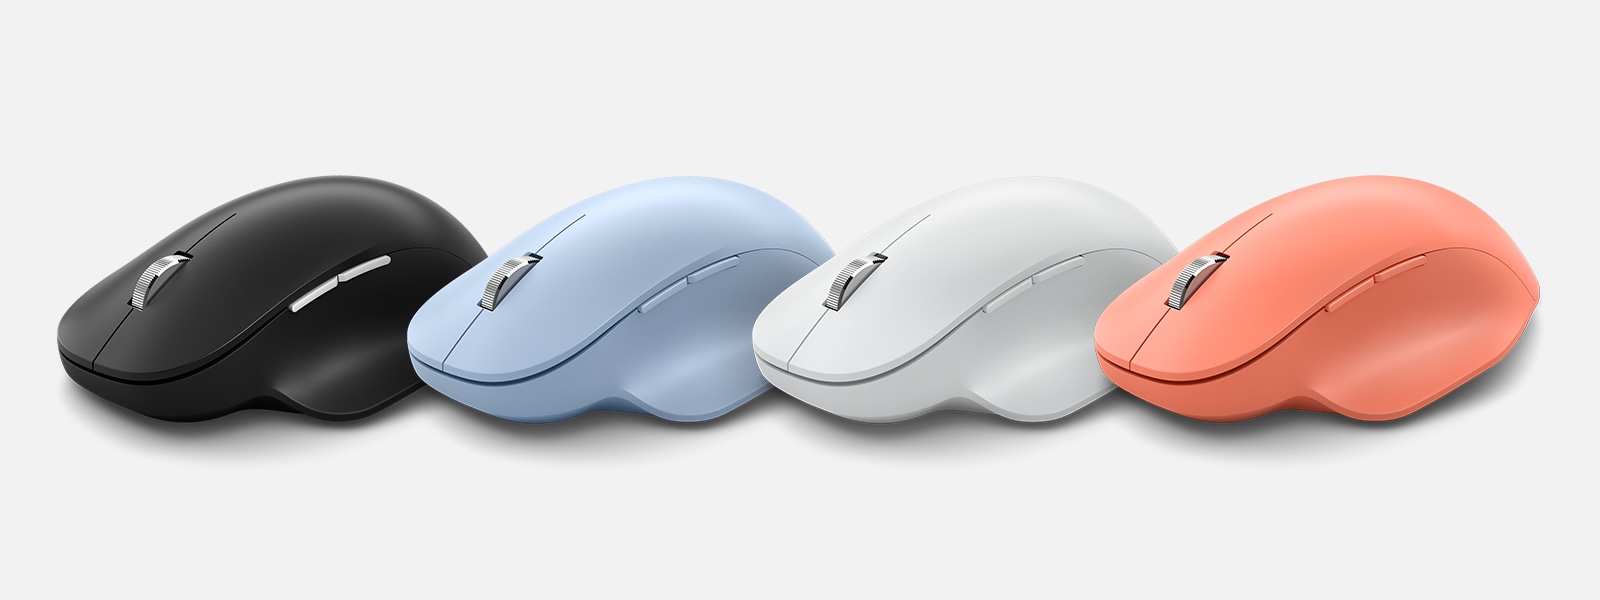 Microsoft Bluetooth® Ergonomic Mouse in multiple colors